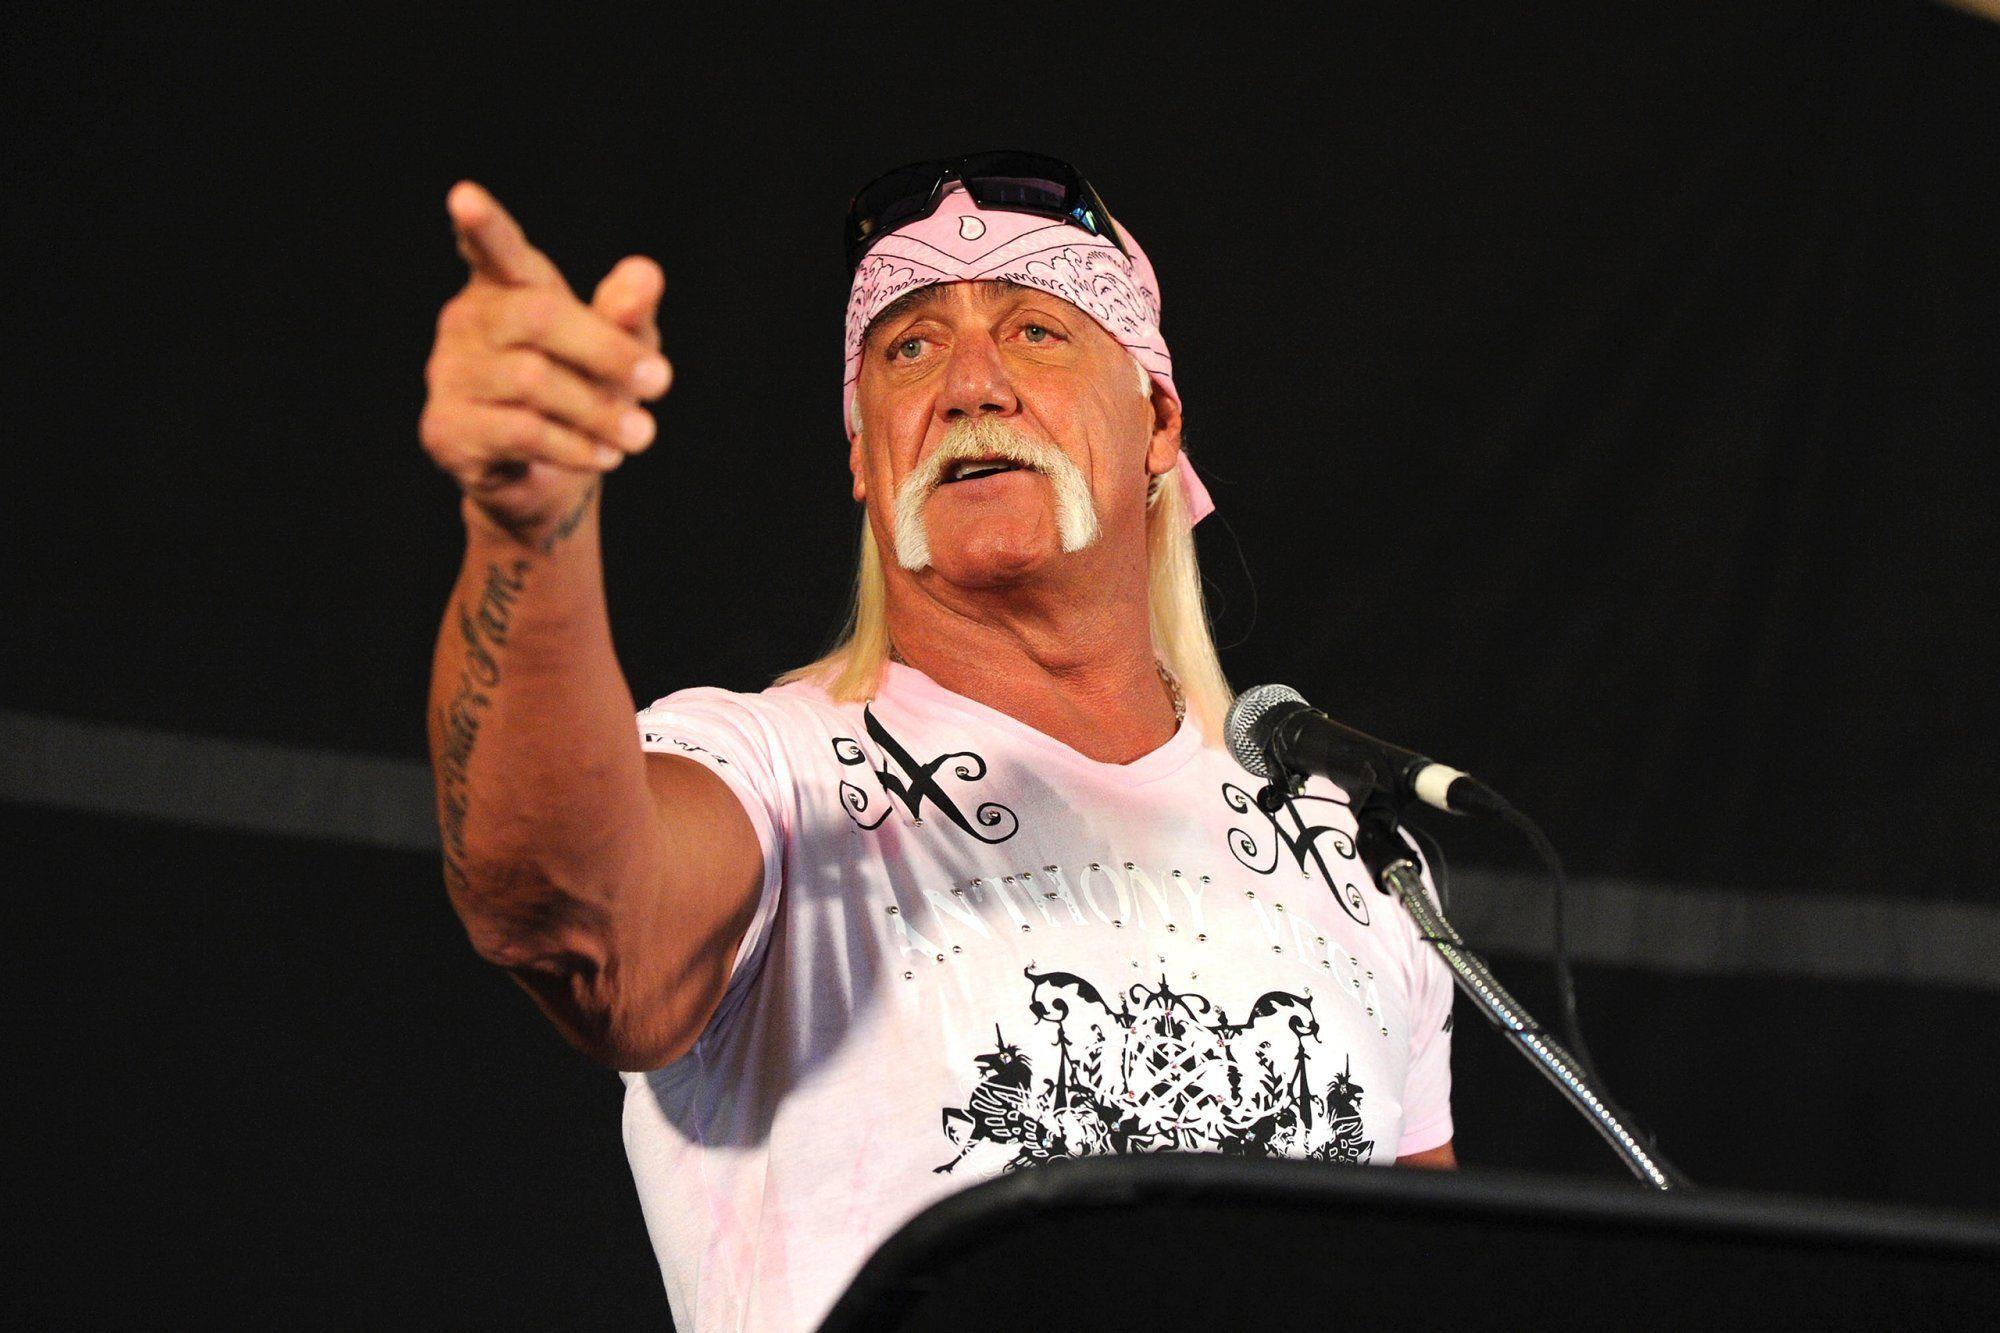 Hulk Hogan Wallpaper Image Photo Picture Background